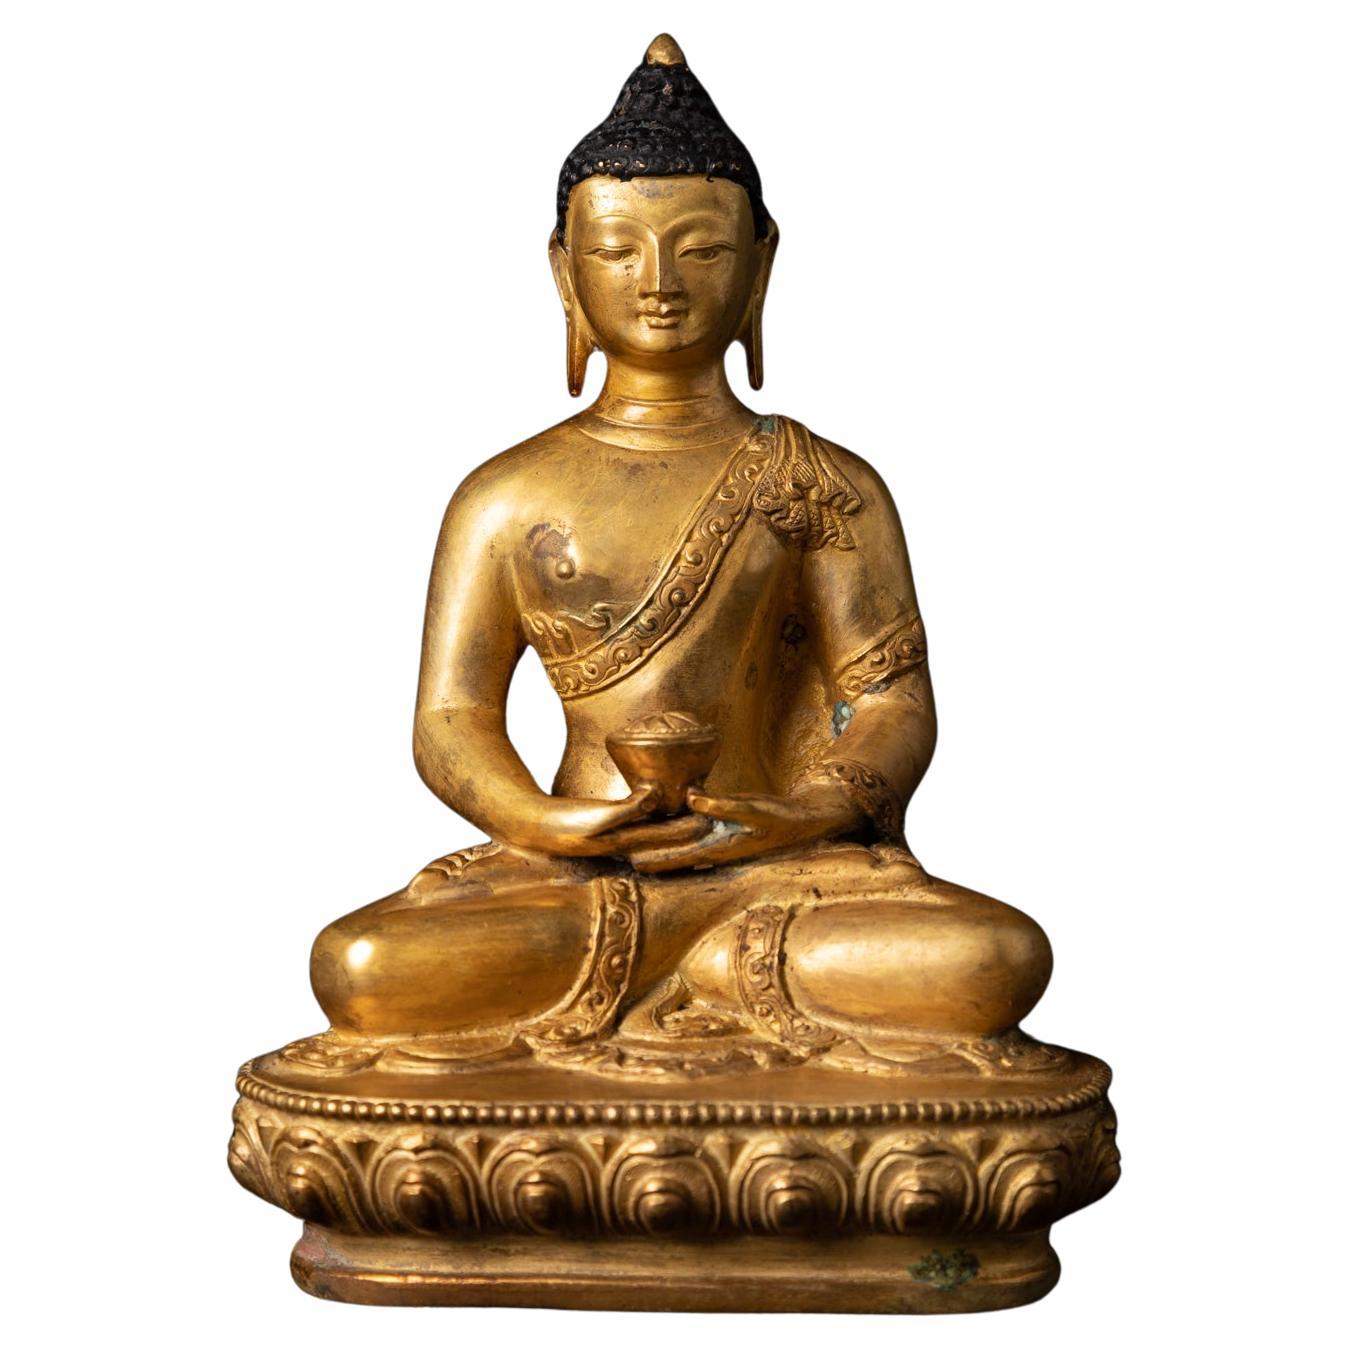 Middle 20th century old bronze Nepali Buddha statue in Dhyana mudra